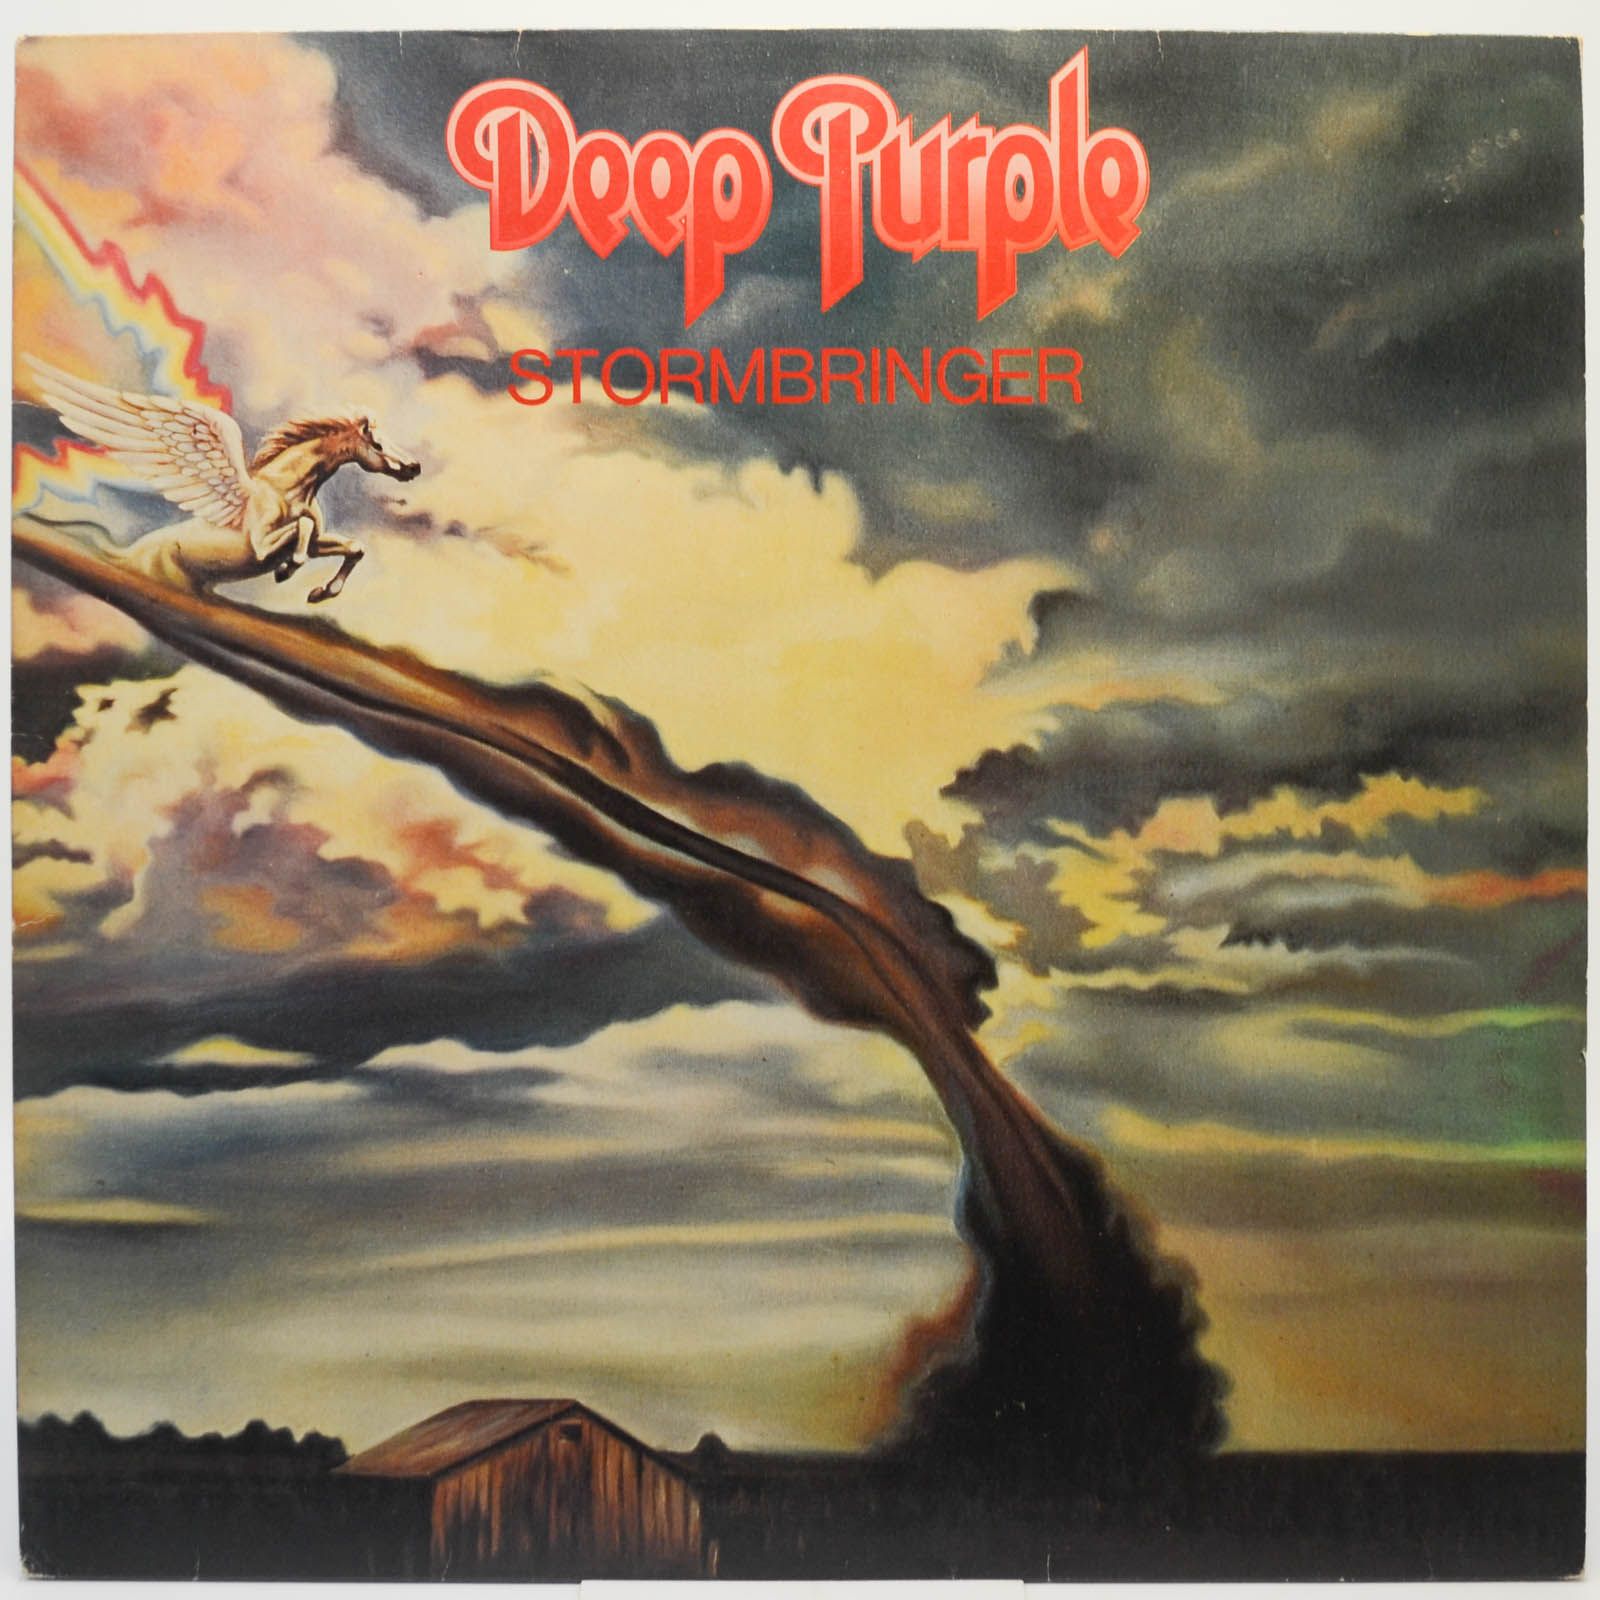 Deep Purple — Stormbringer, 1974